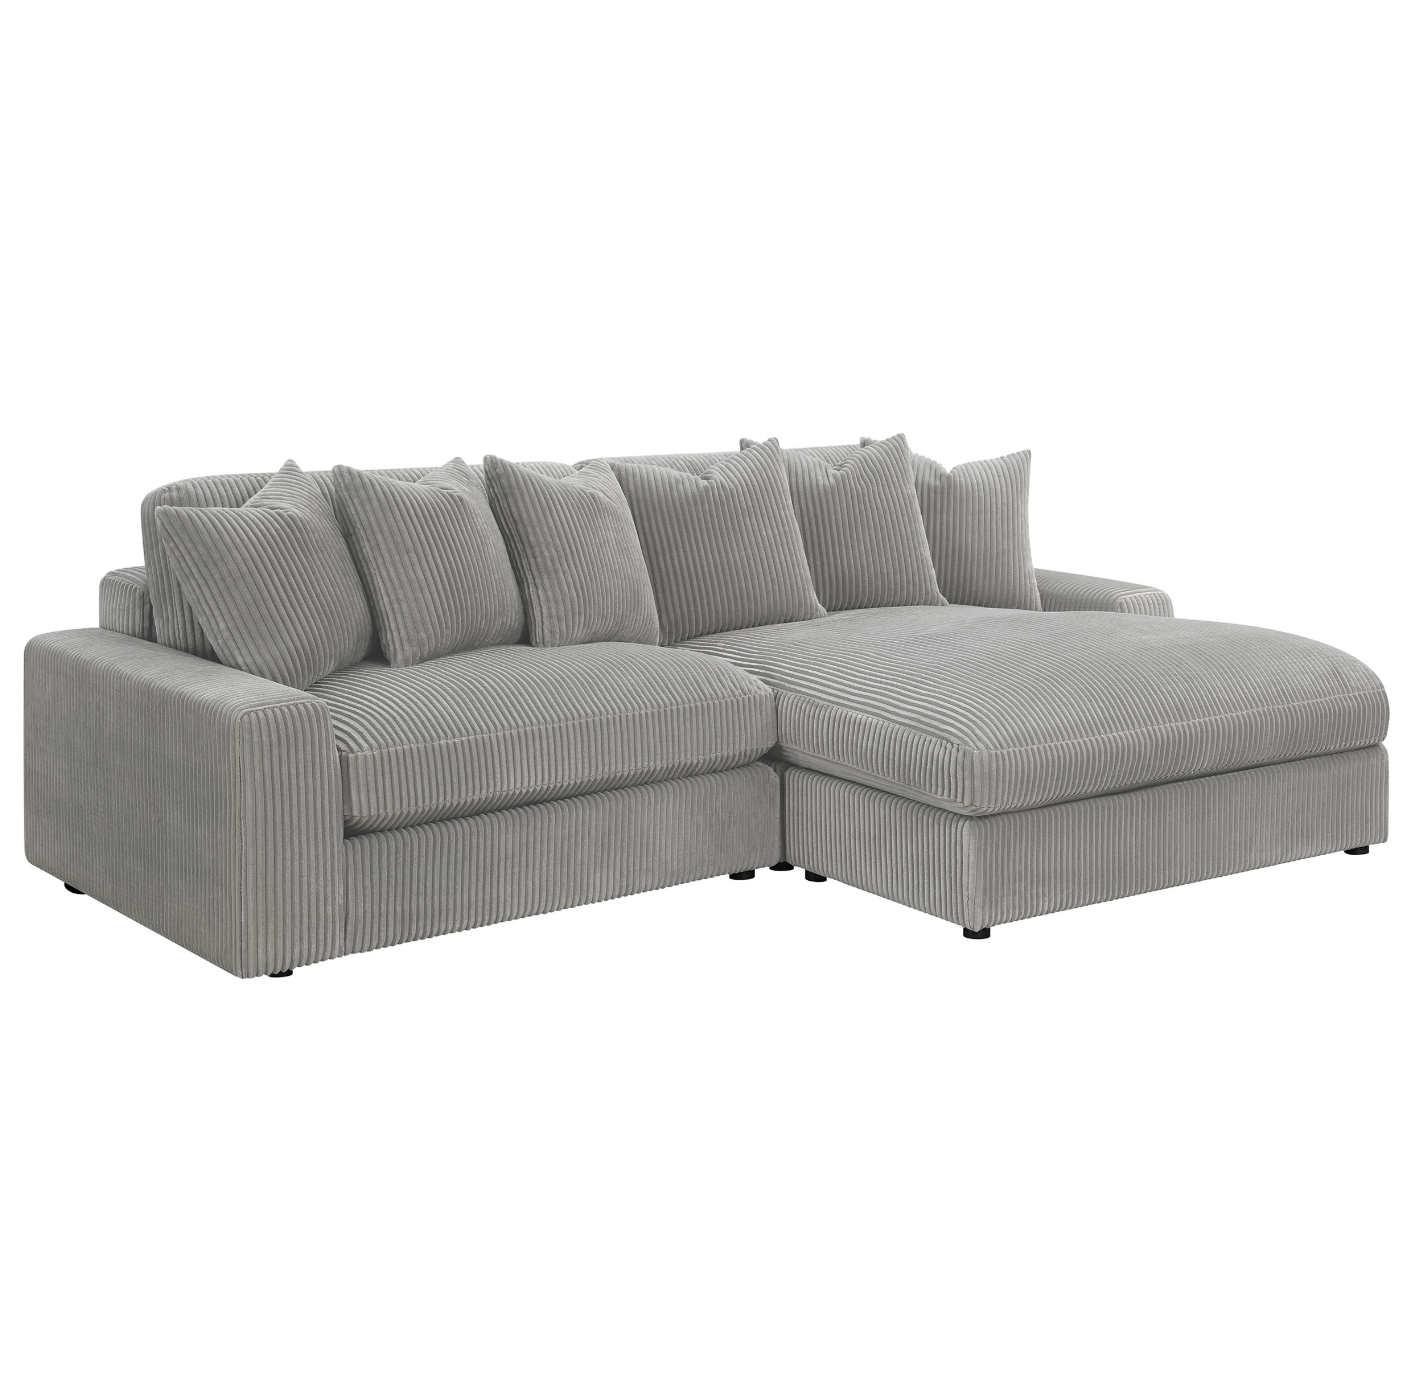 Blaine Upholstered Reversible Sectional Sofa Grey